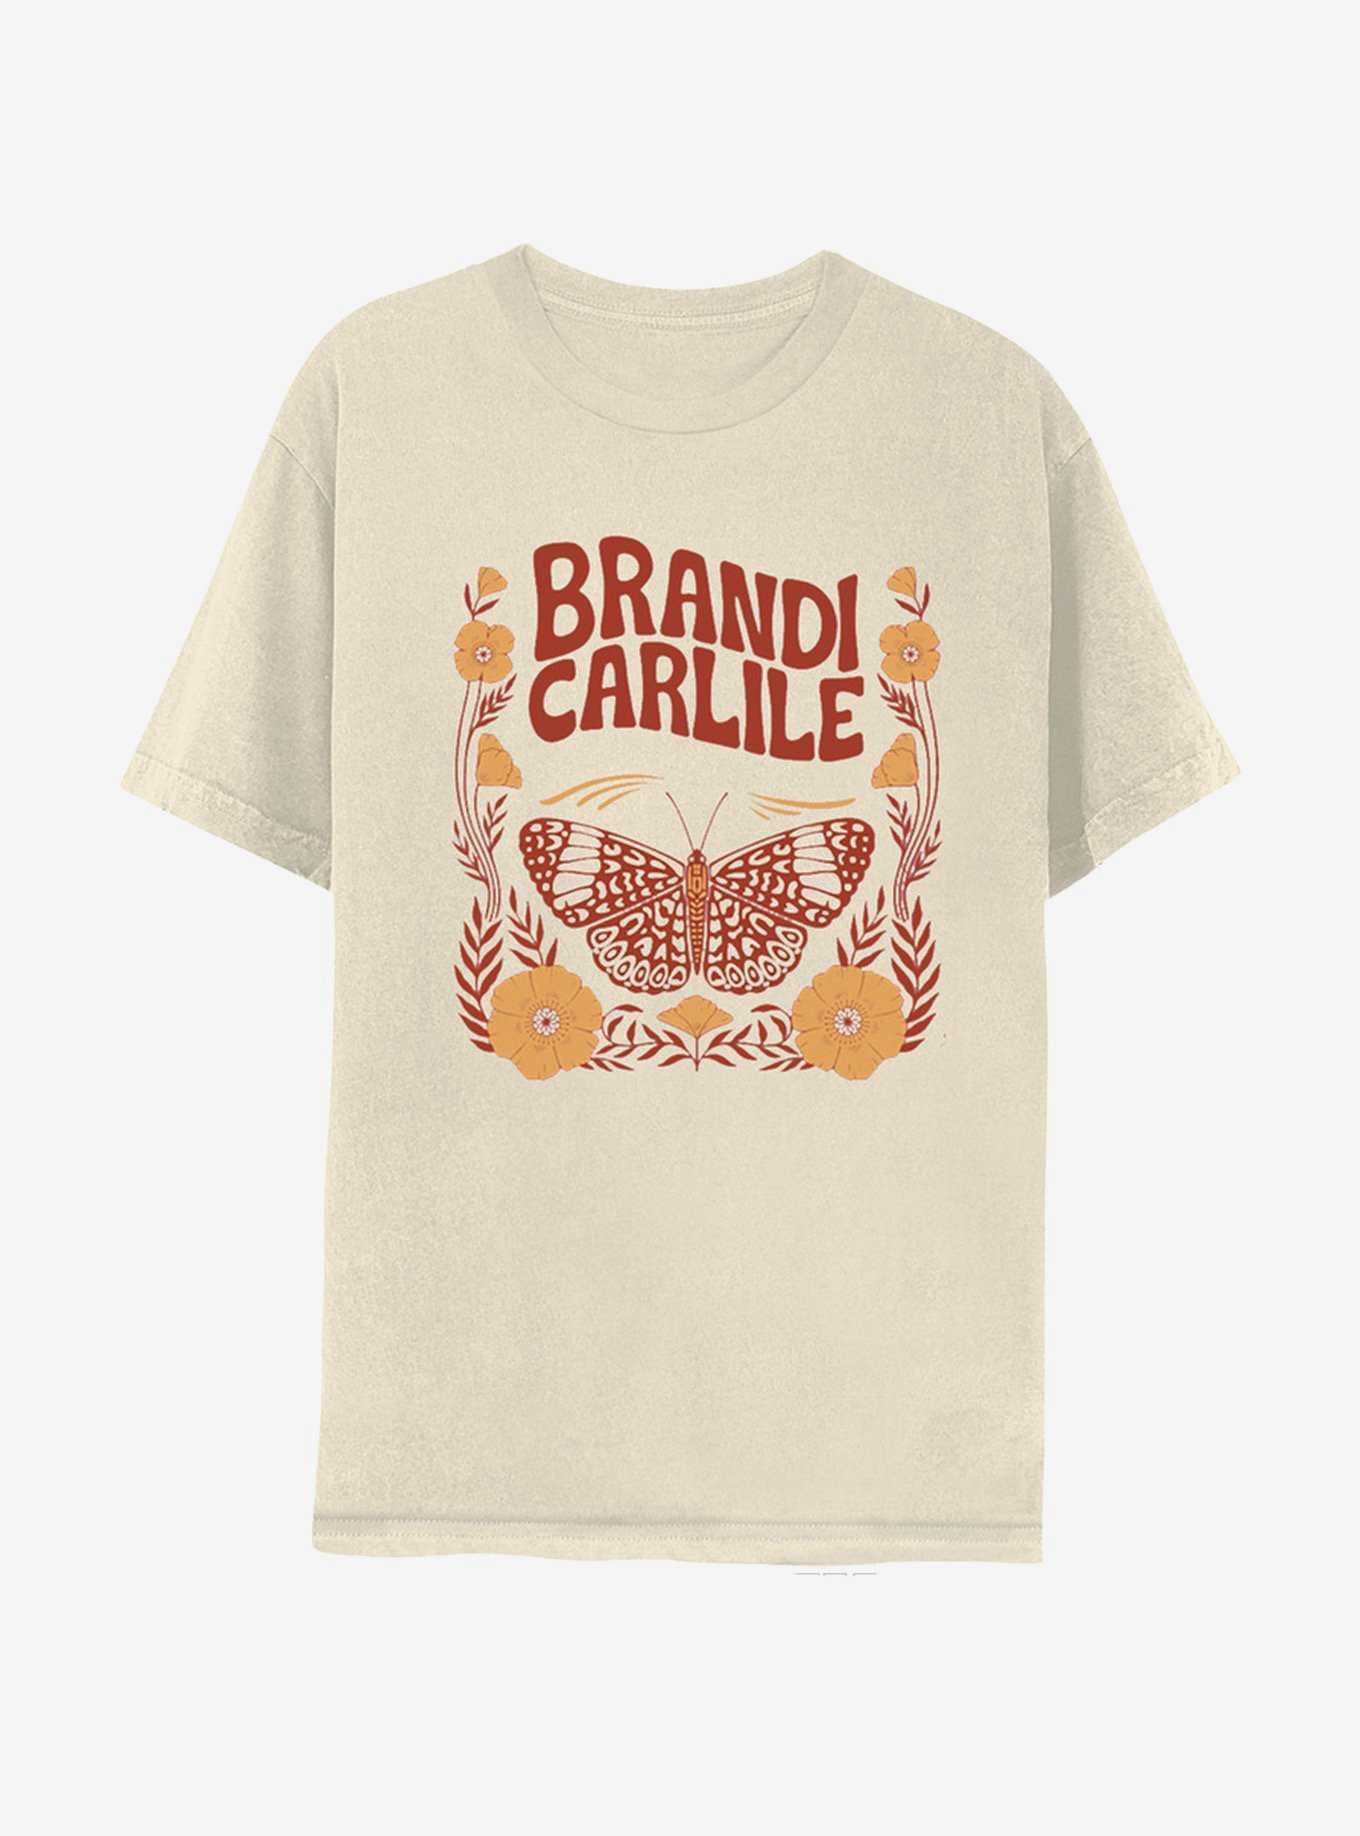 Brandi Carlile Butterfly Boyfriend Fit Girls T-Shirt, , hi-res